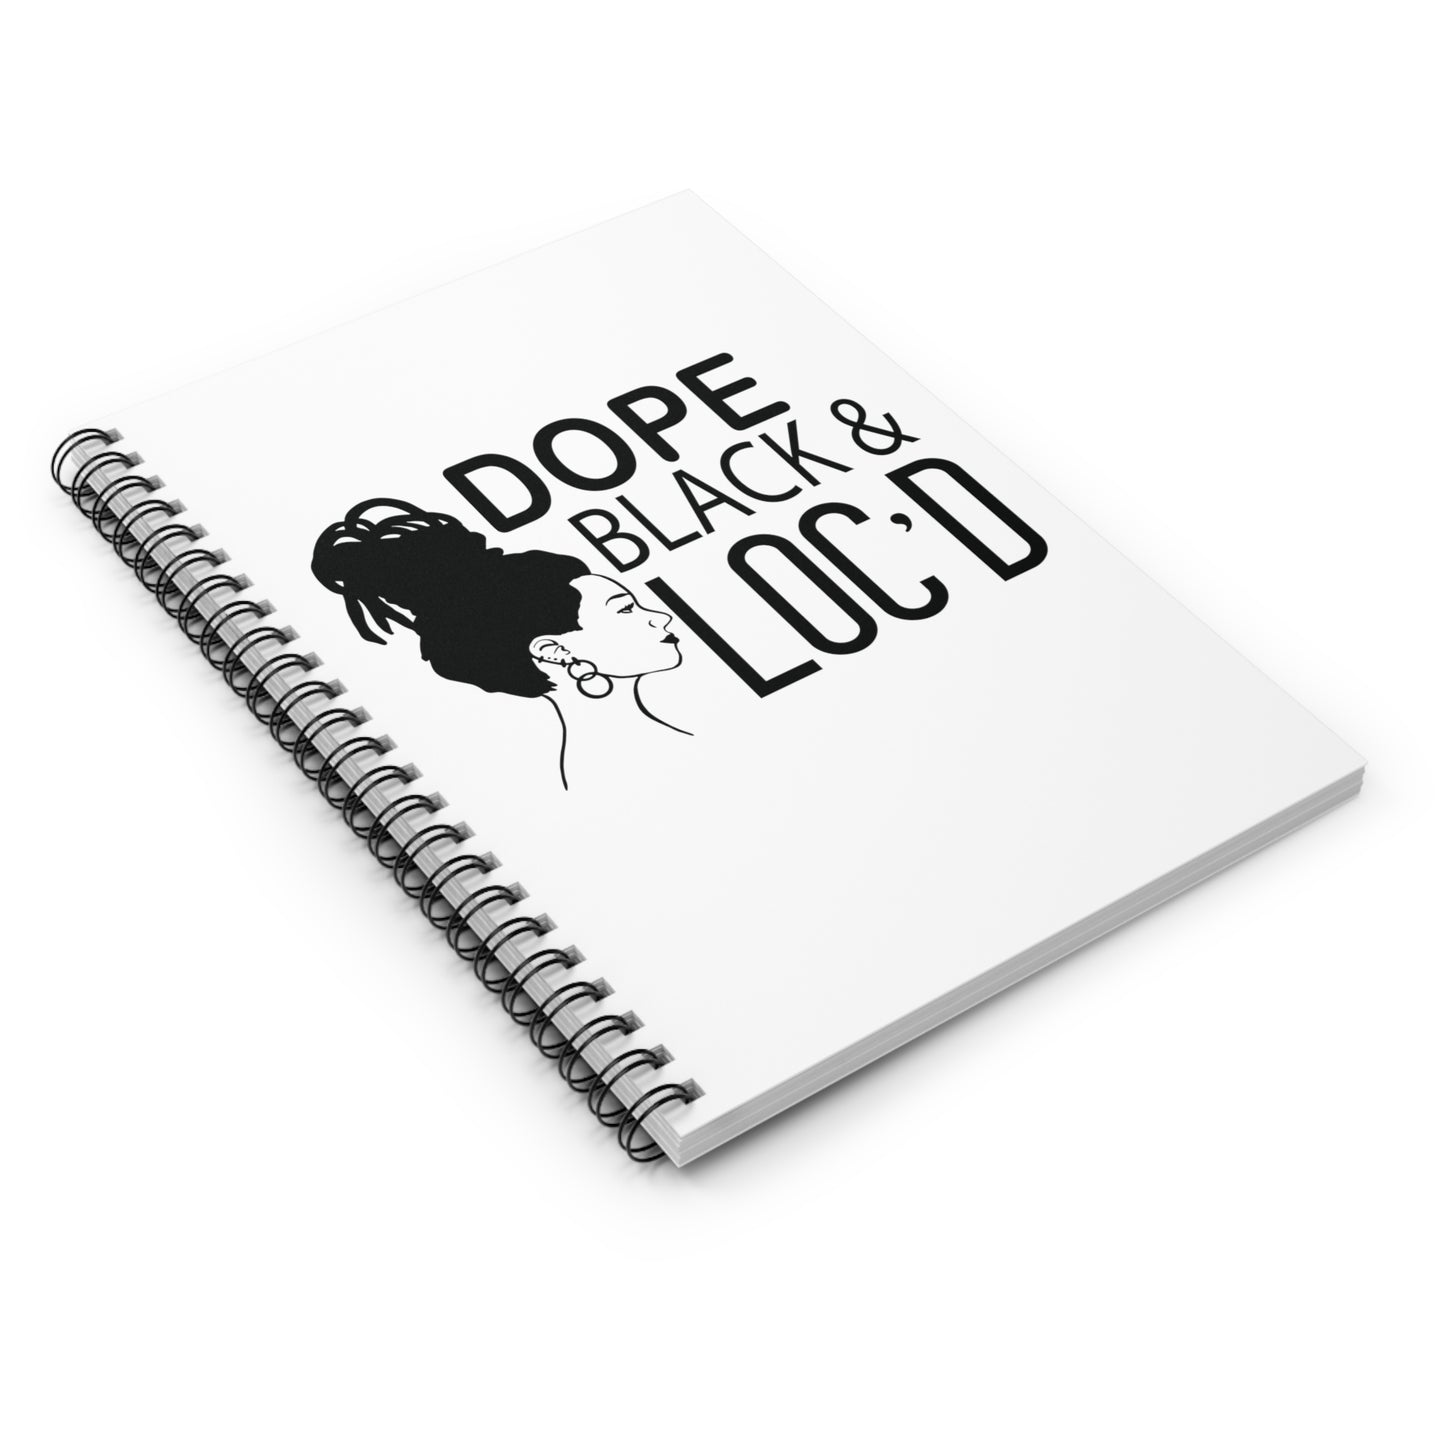 Dope Black & Loc'd Spiral Notebook - Ruled Line